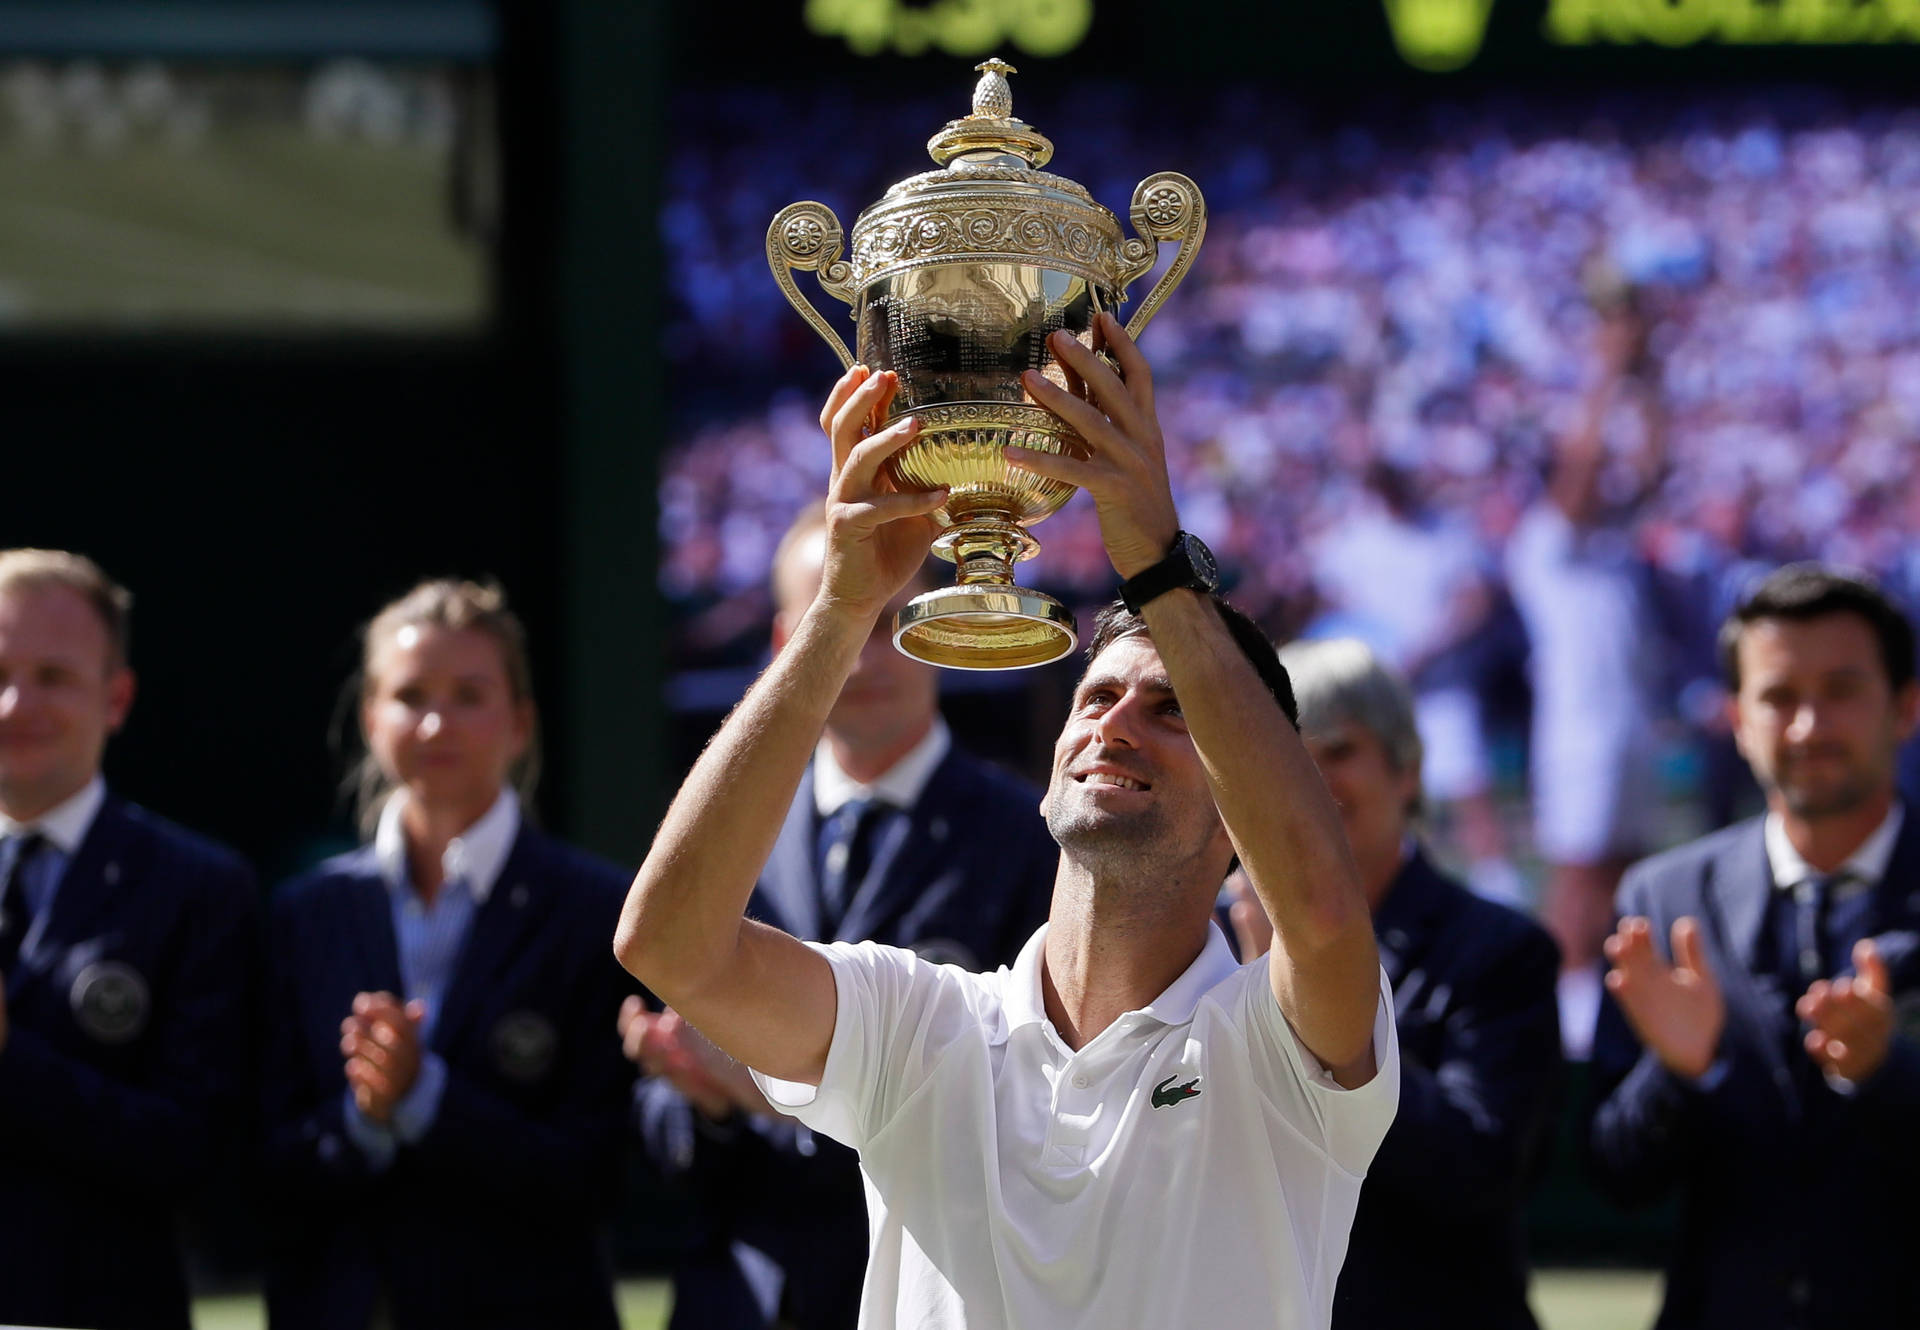 Novak Djokovic 2018 Wimbledon Men's Winner Background